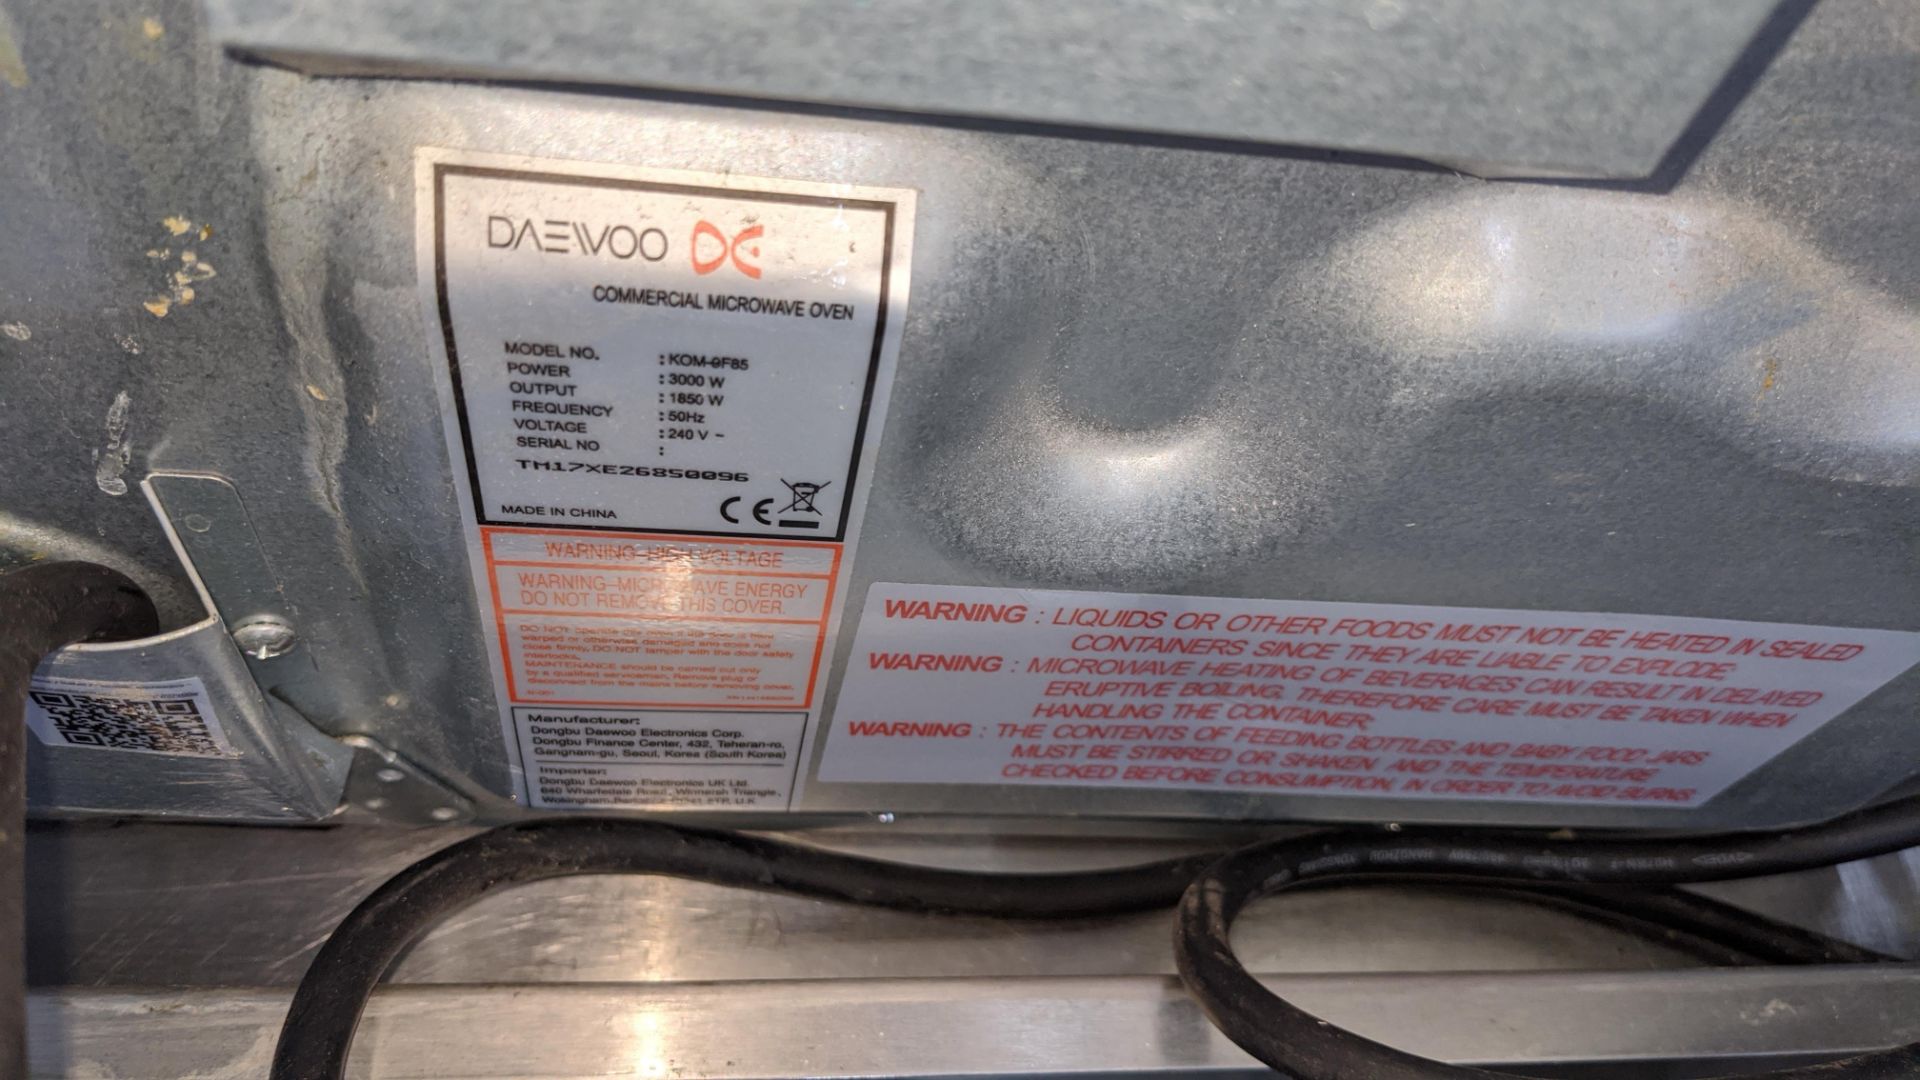 Daewoo commercial microwave model KOM-9F85 - Image 4 of 5